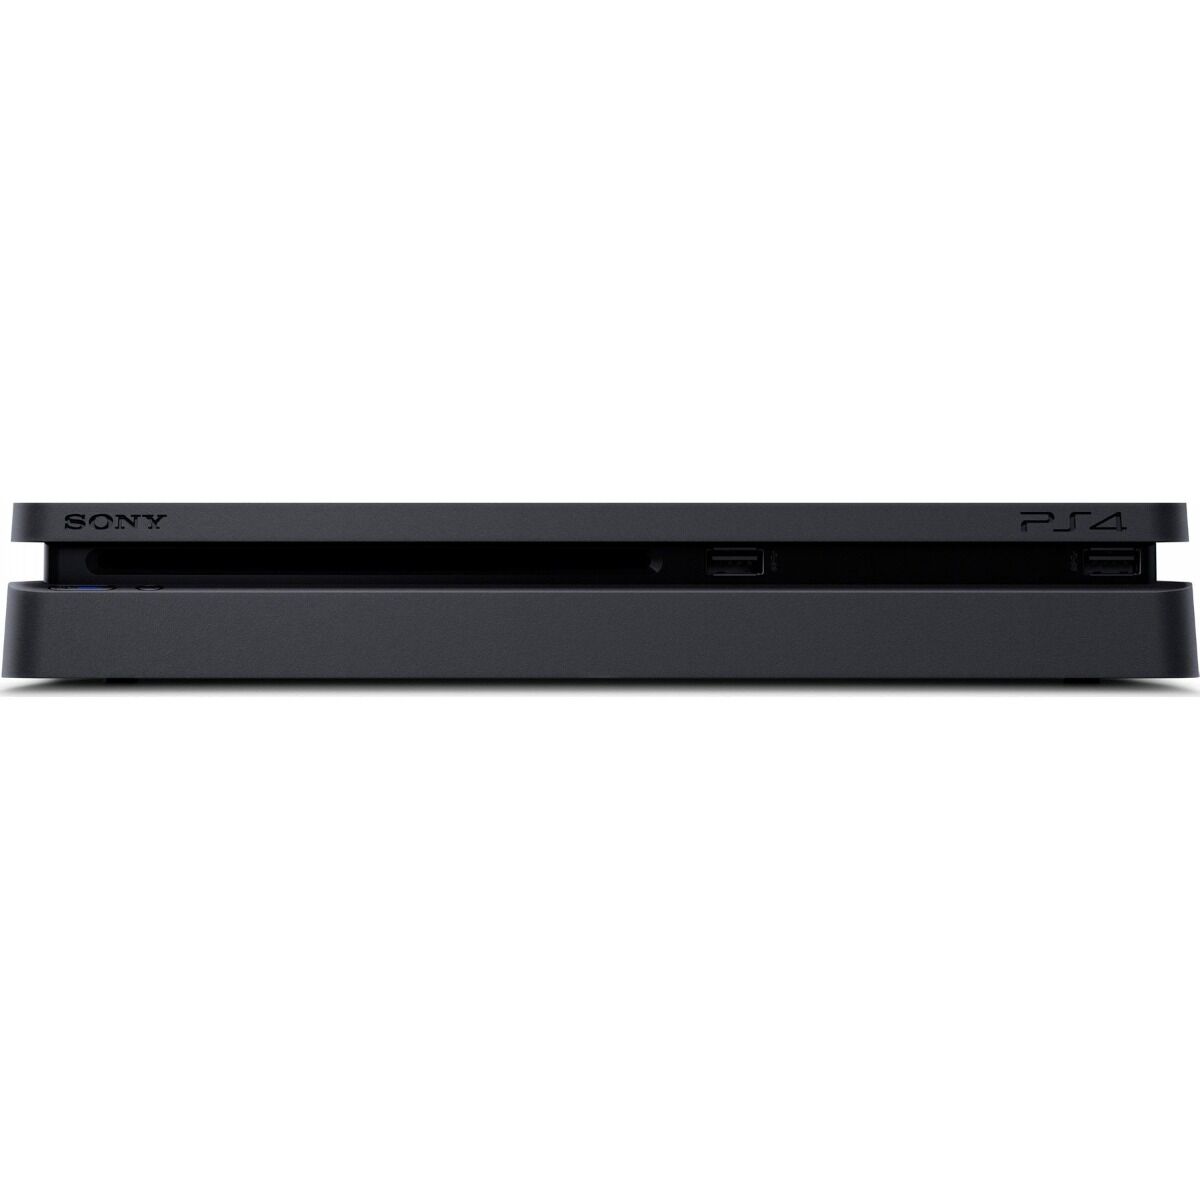 Consola PlayStation 4 Slim Sony 1 TB Black  + Joc Gran Turismo Sport 